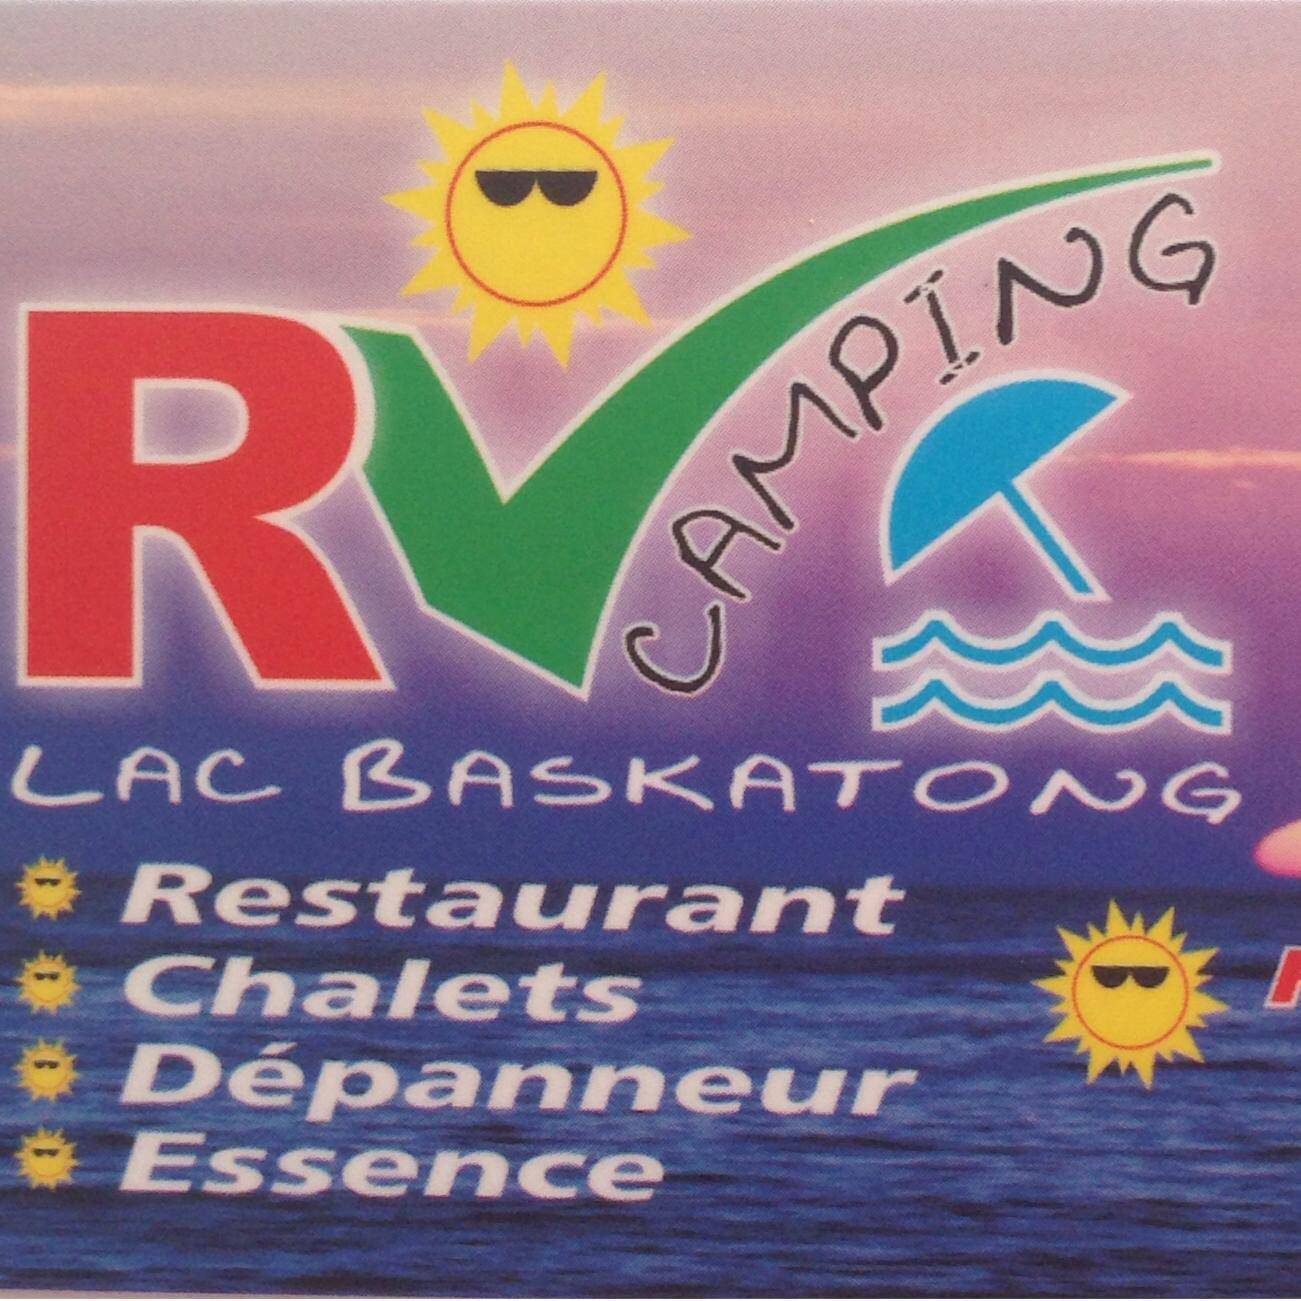 Rv camping logo